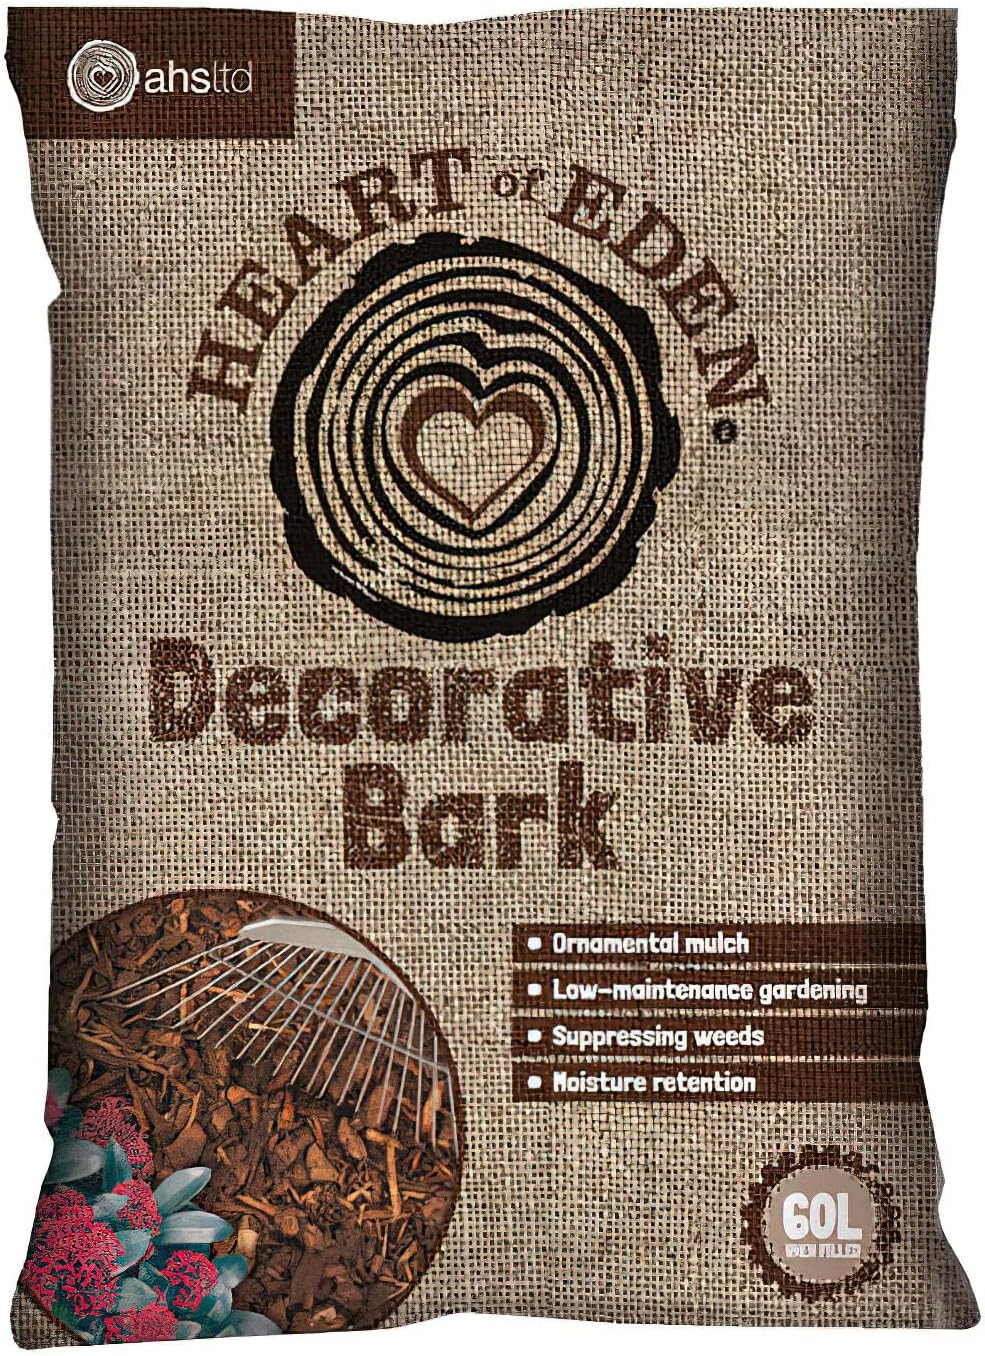 Heart of Eden Decorative Bark, 60L